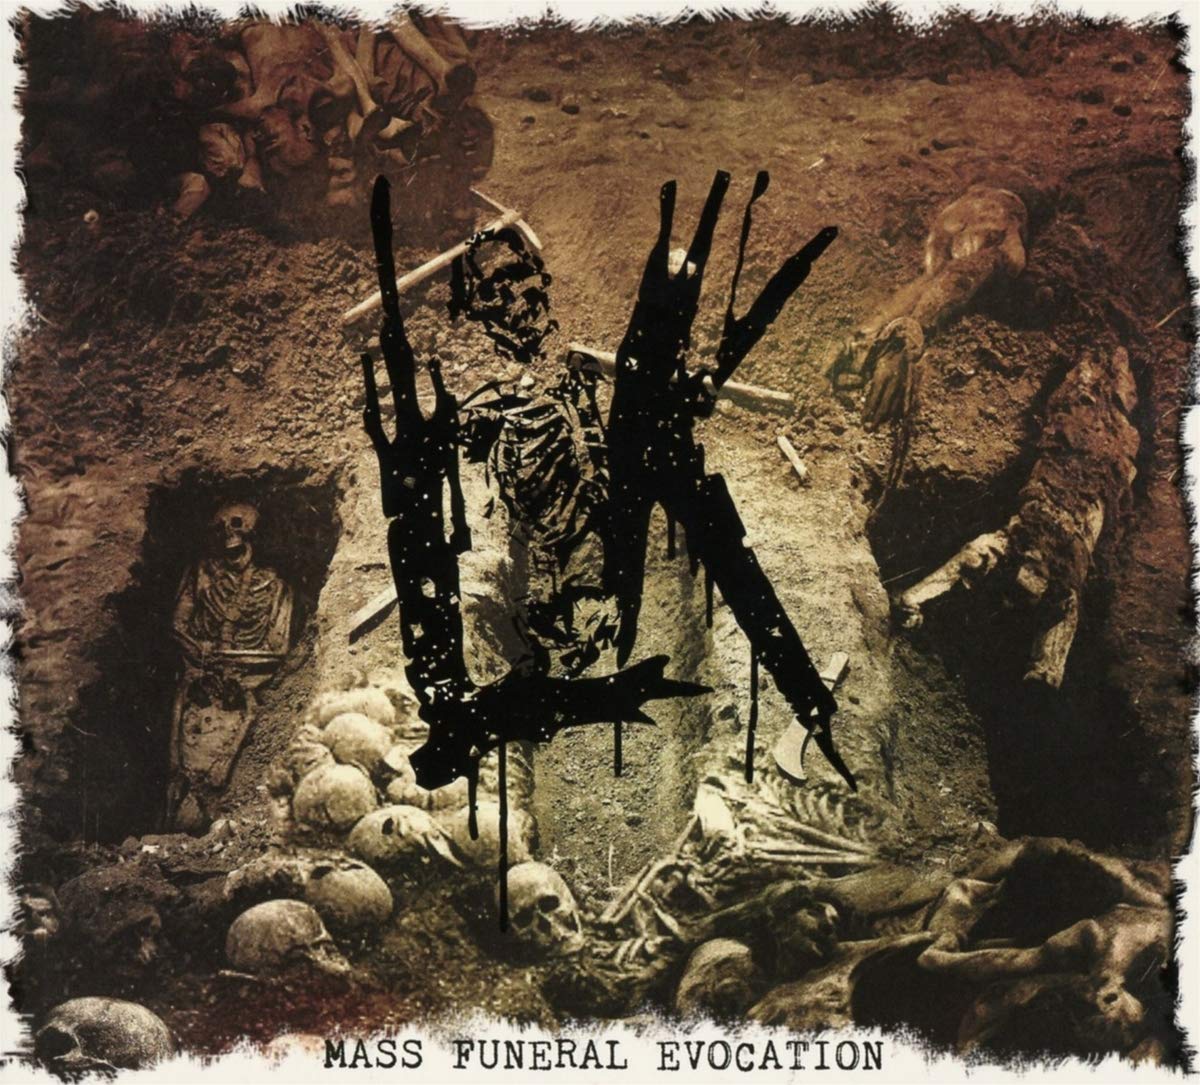 Lik - Mass Funeral Evocation (Ltd. Ed. 2019 digipak reissue with 2 bonus tracks) - CD - New